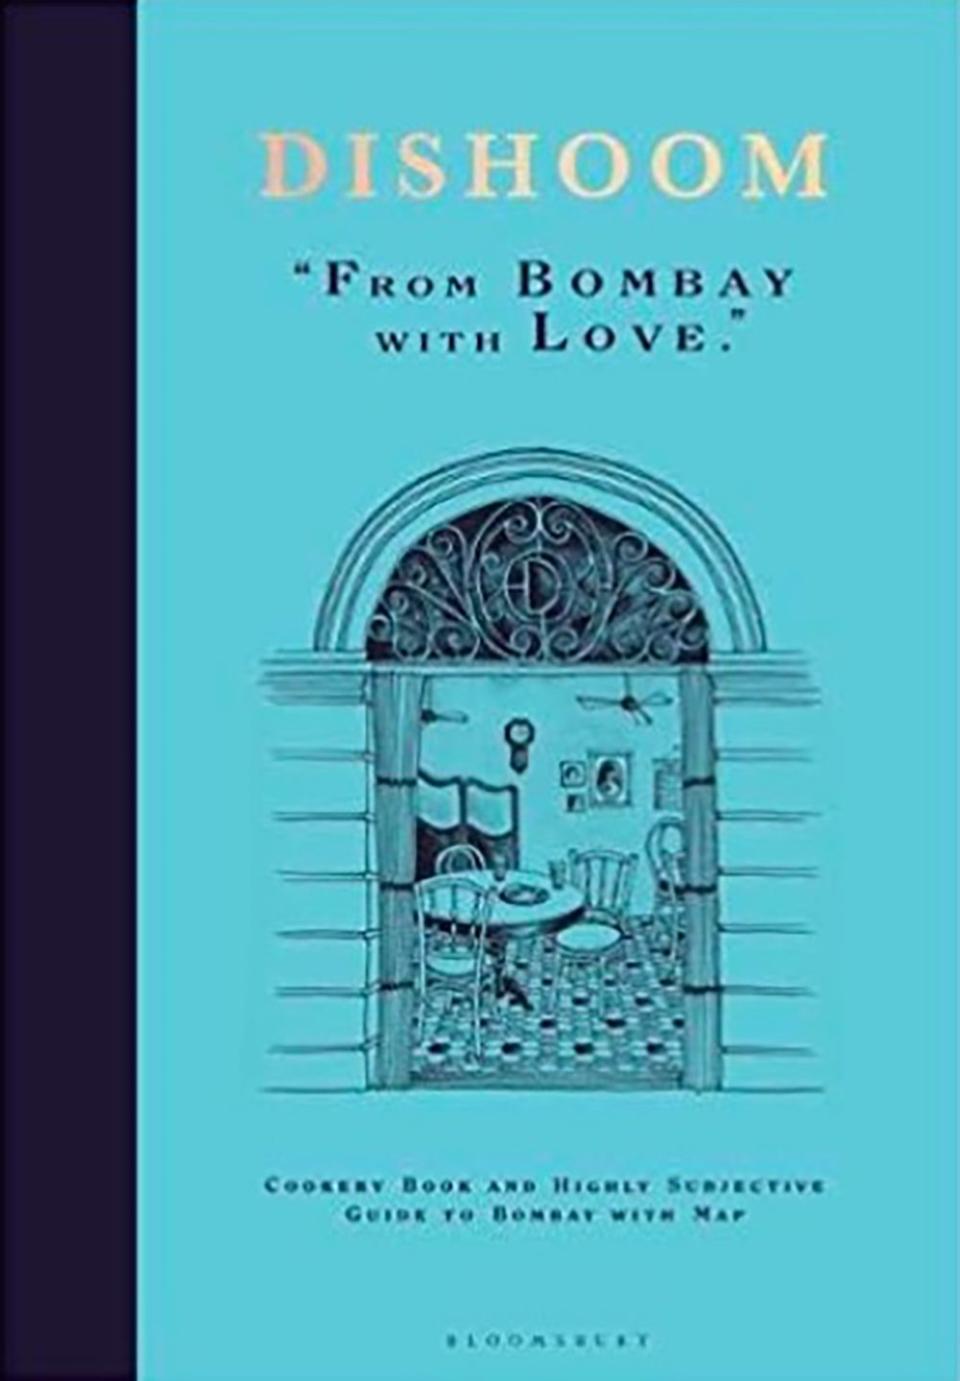 Dishoom: From Bombay With Love by Shamil Thakrar, Kavi Thakrar and Naved Nasir